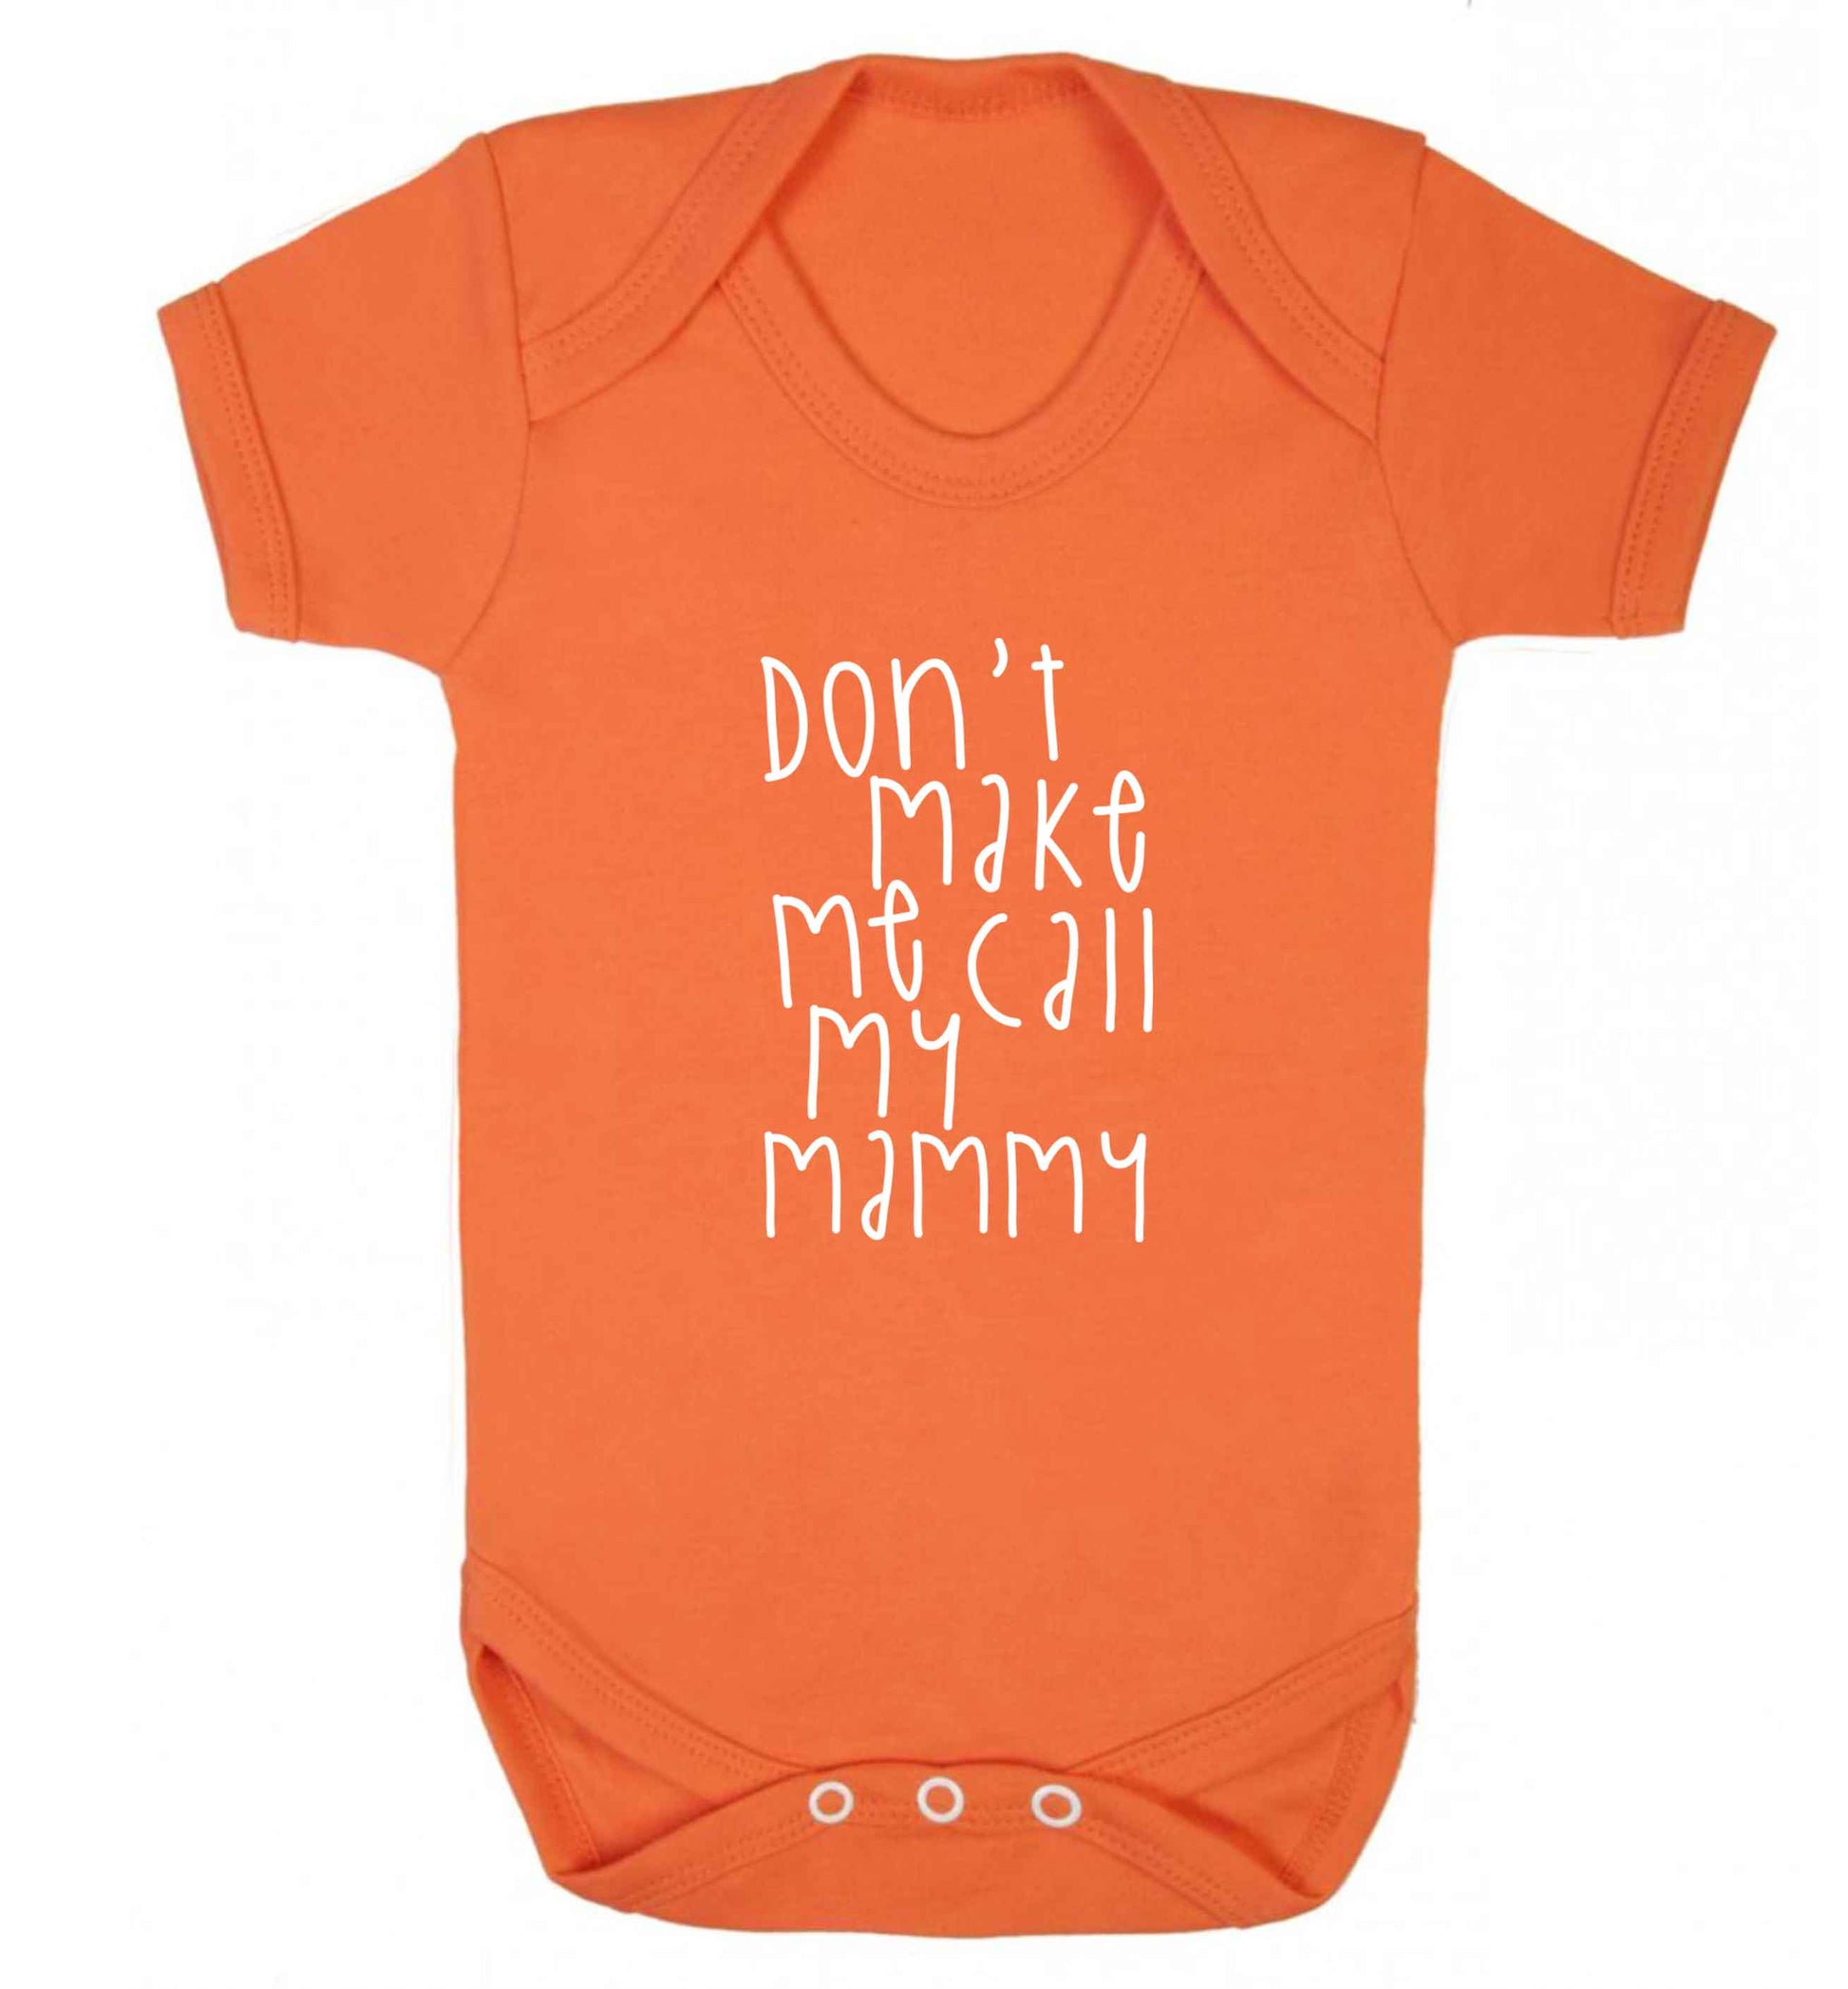 Don't make me call my mammy baby vest orange 18-24 months